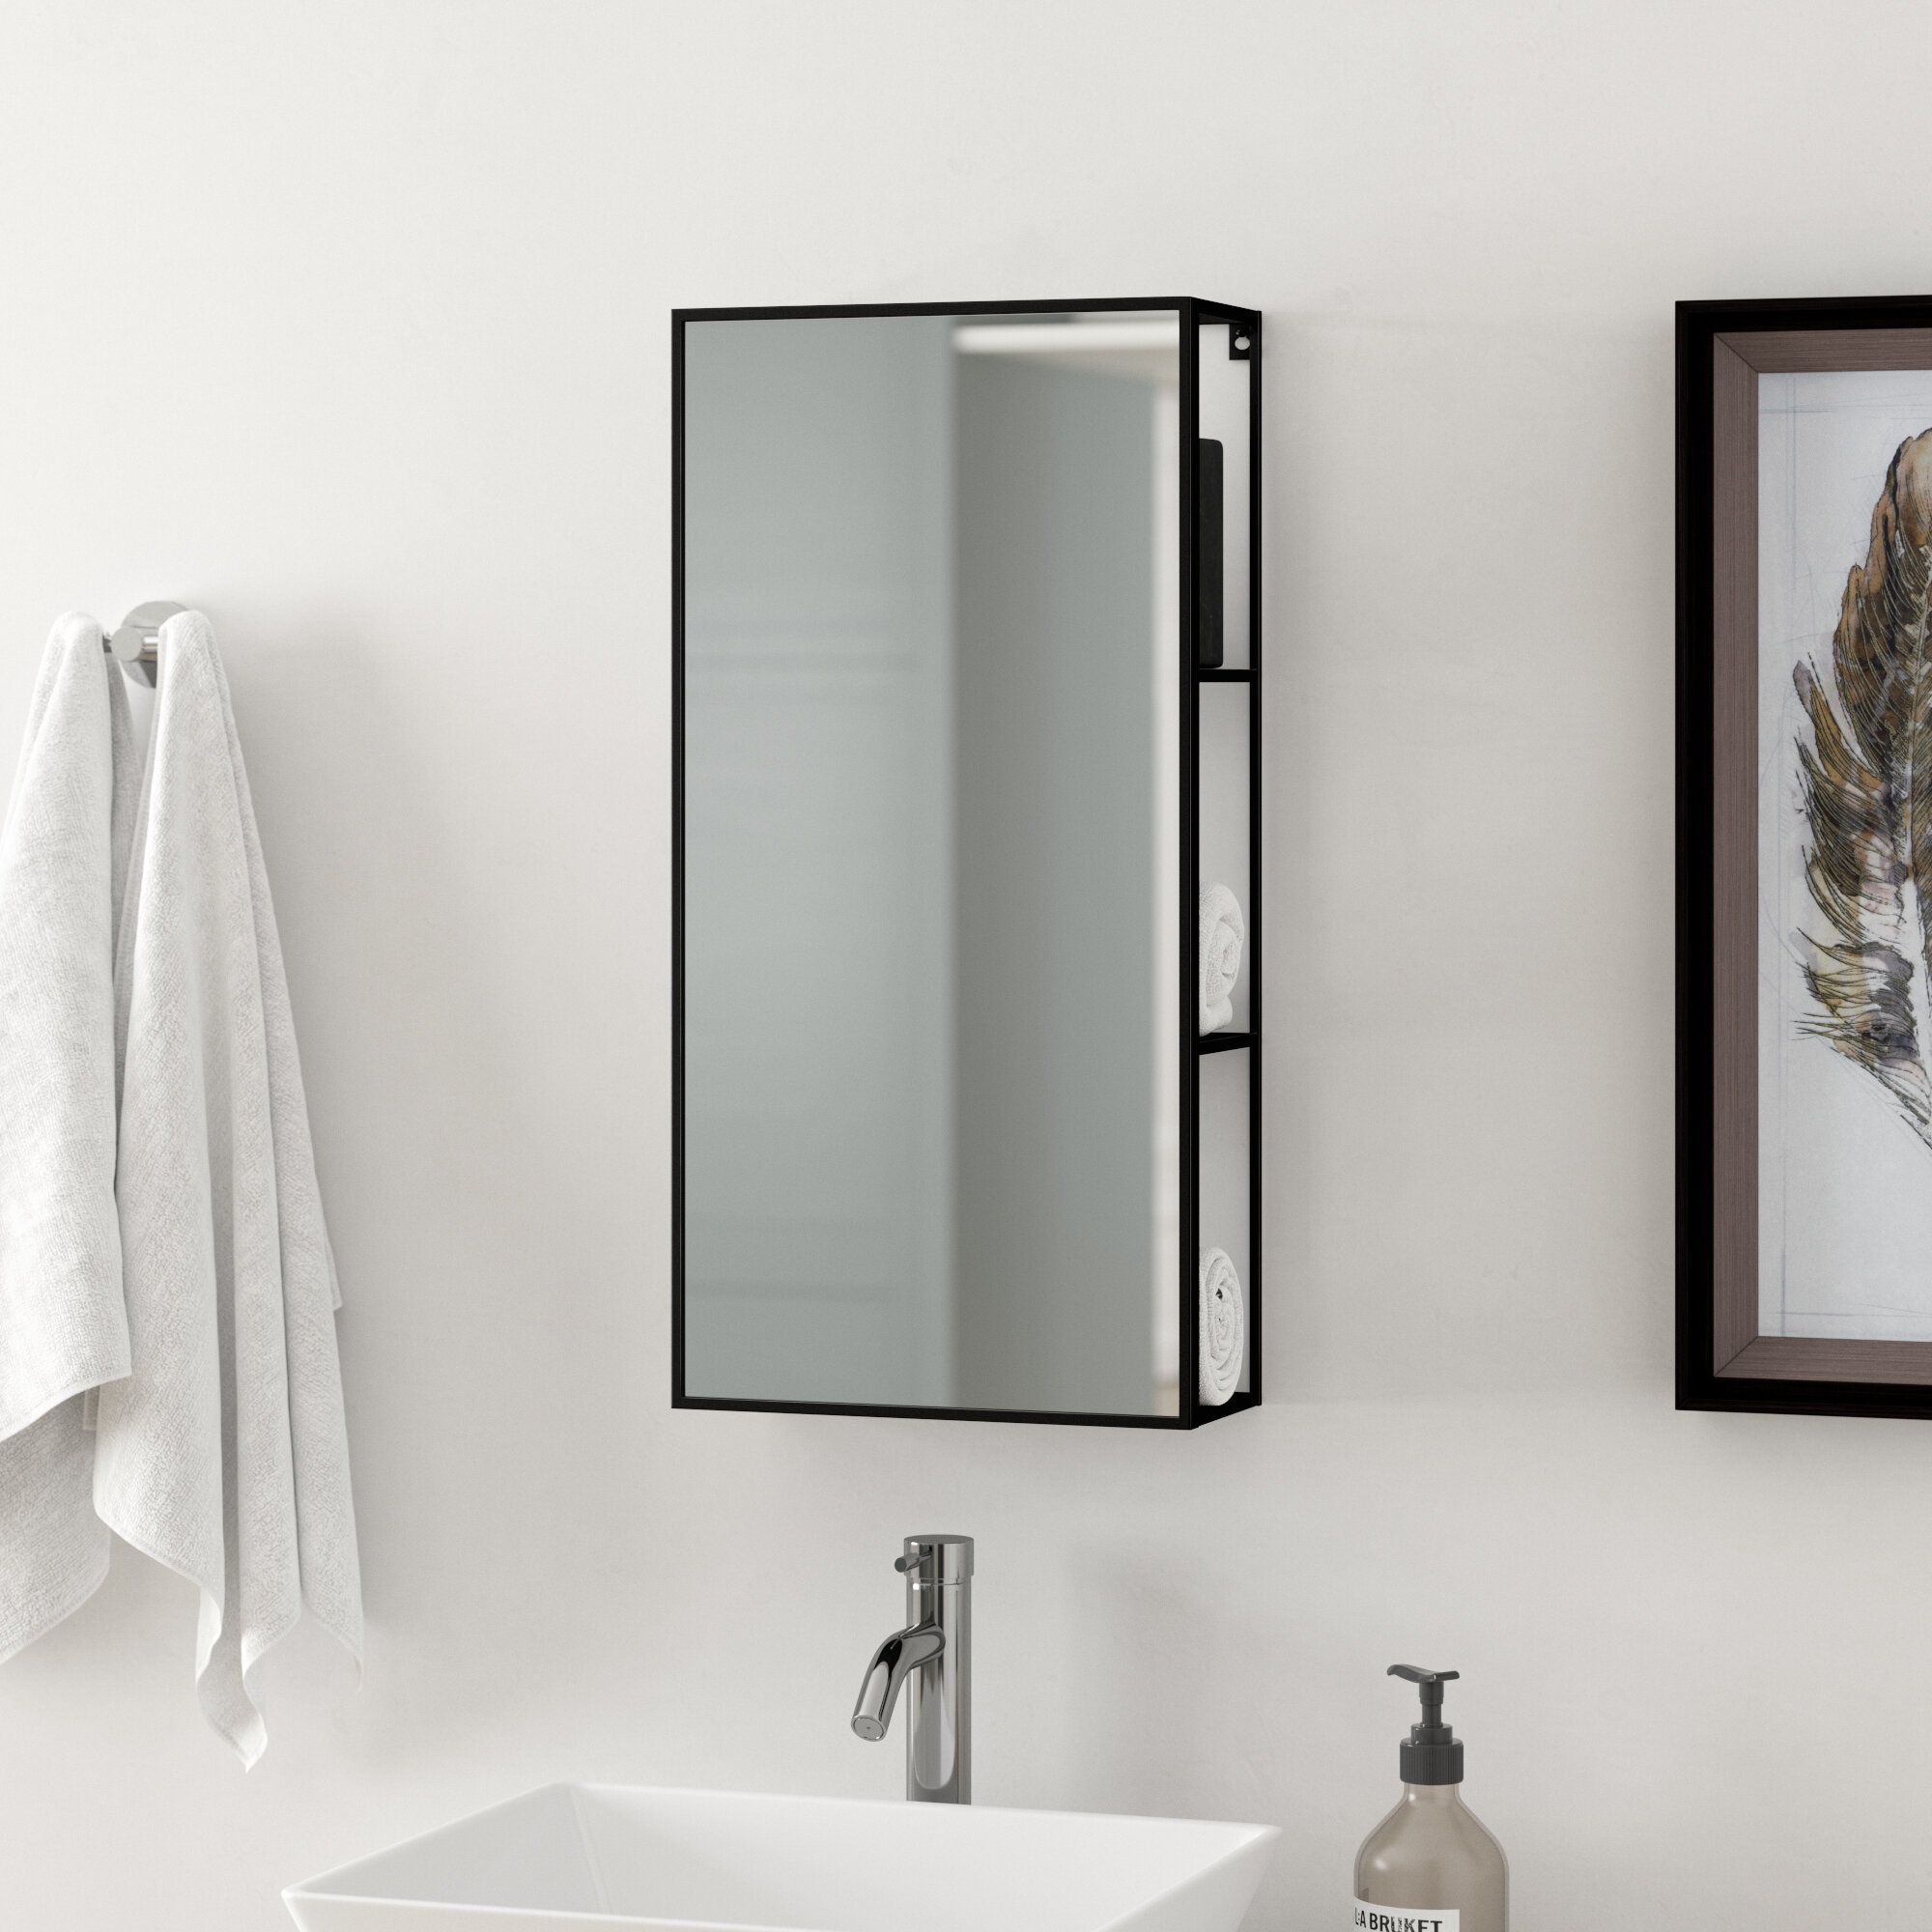 Umbra 3048cm W X 6129cm H X 1334cm D Wall Mounted Bathroom Cabinet Reviews Wayfaircouk